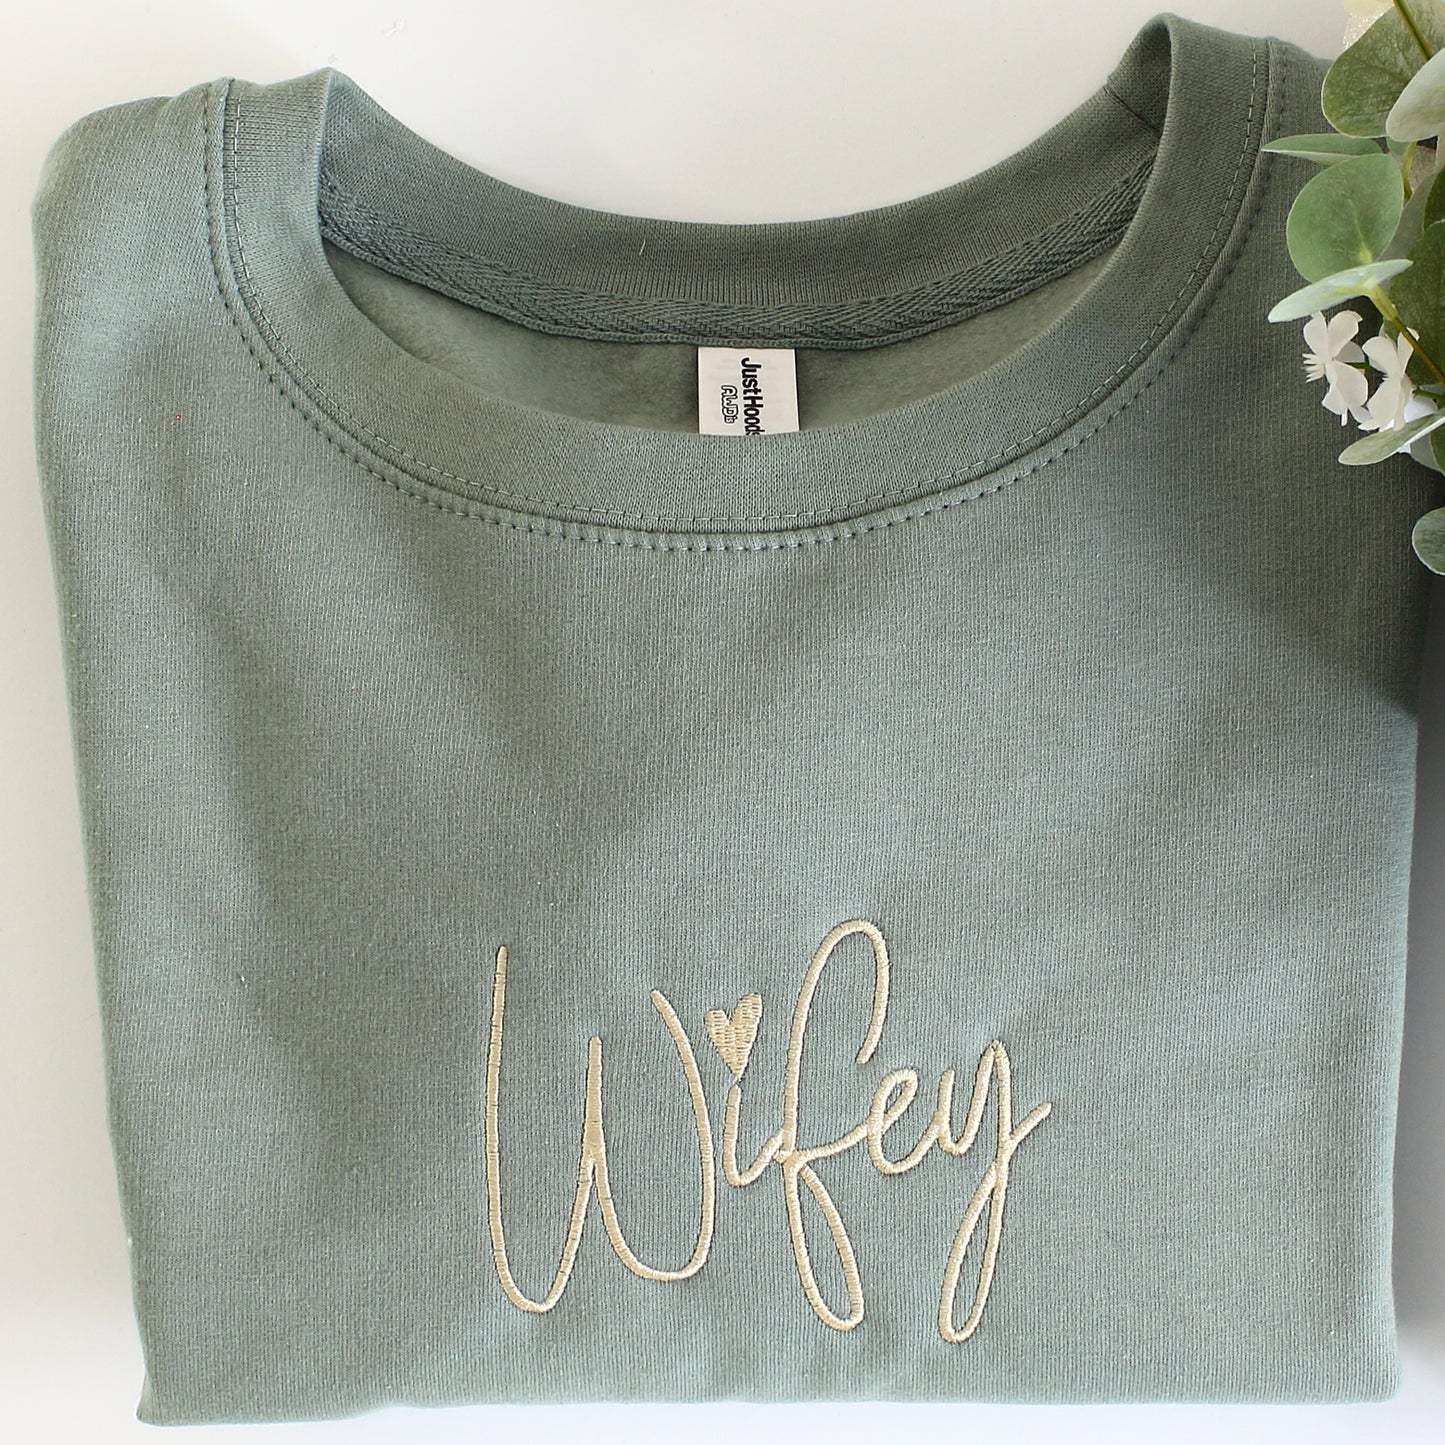 Wifey (heart) Sweatshirt & other roles